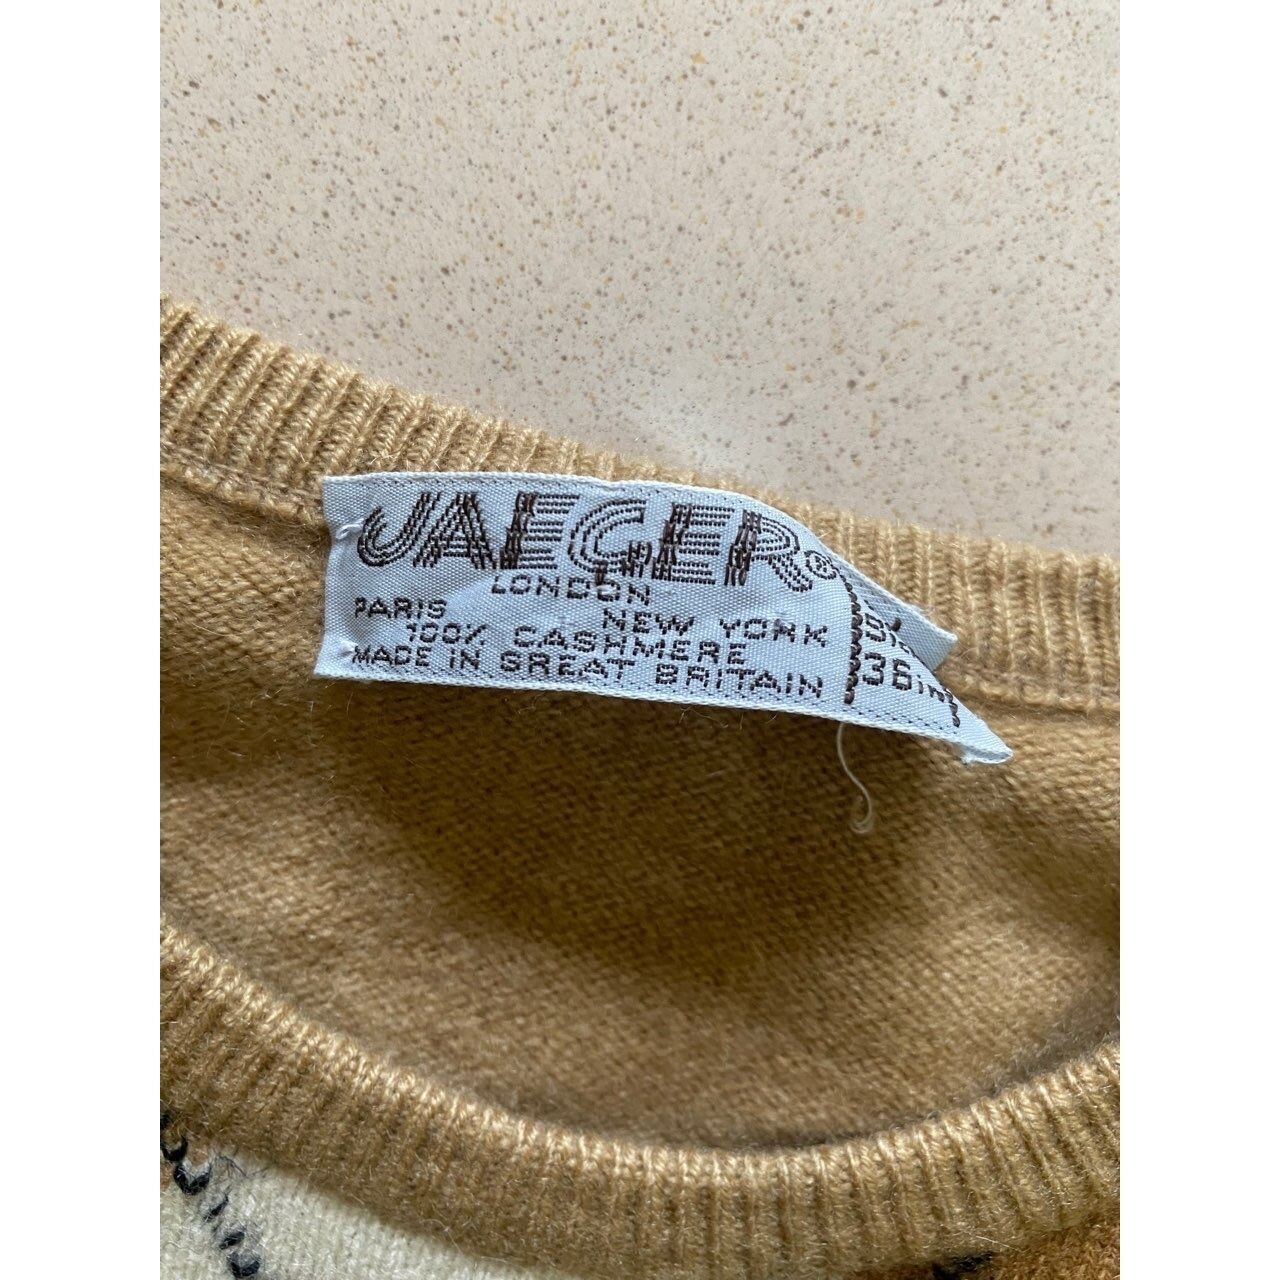 Jaeger Brown Sweater